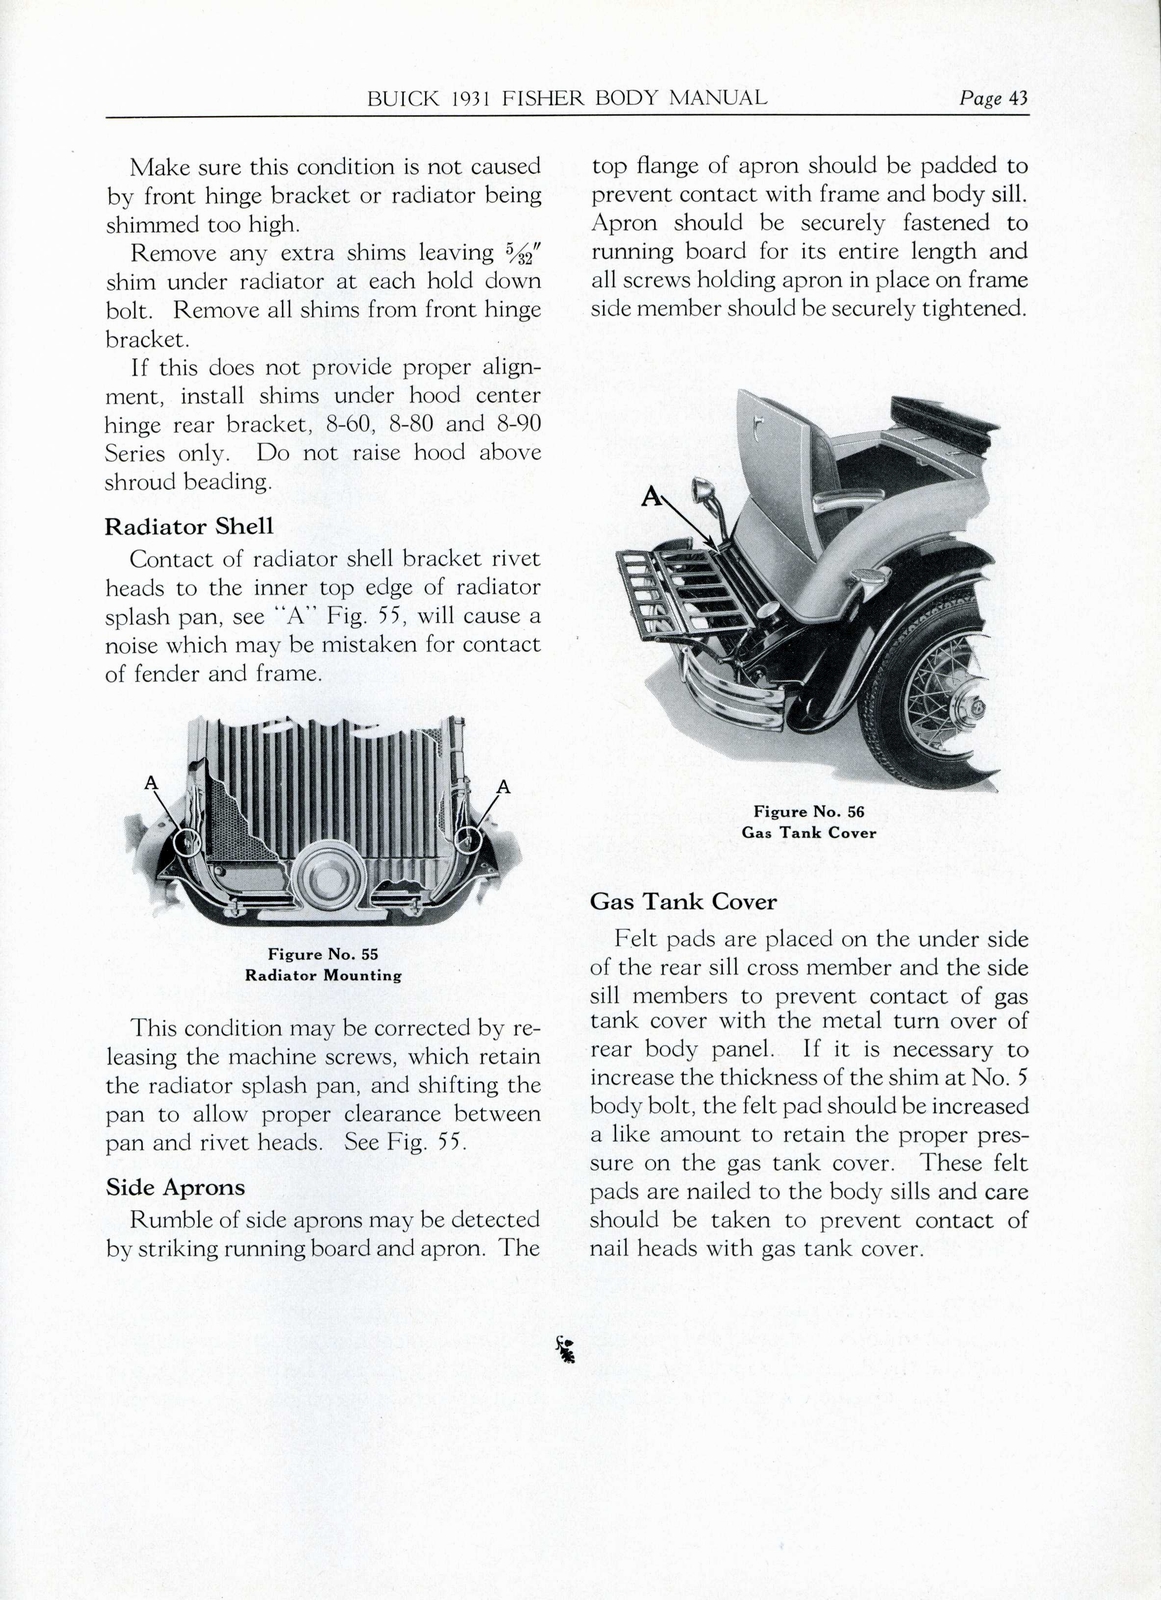 n_1931 Buick Fisher Body Manual-43.jpg